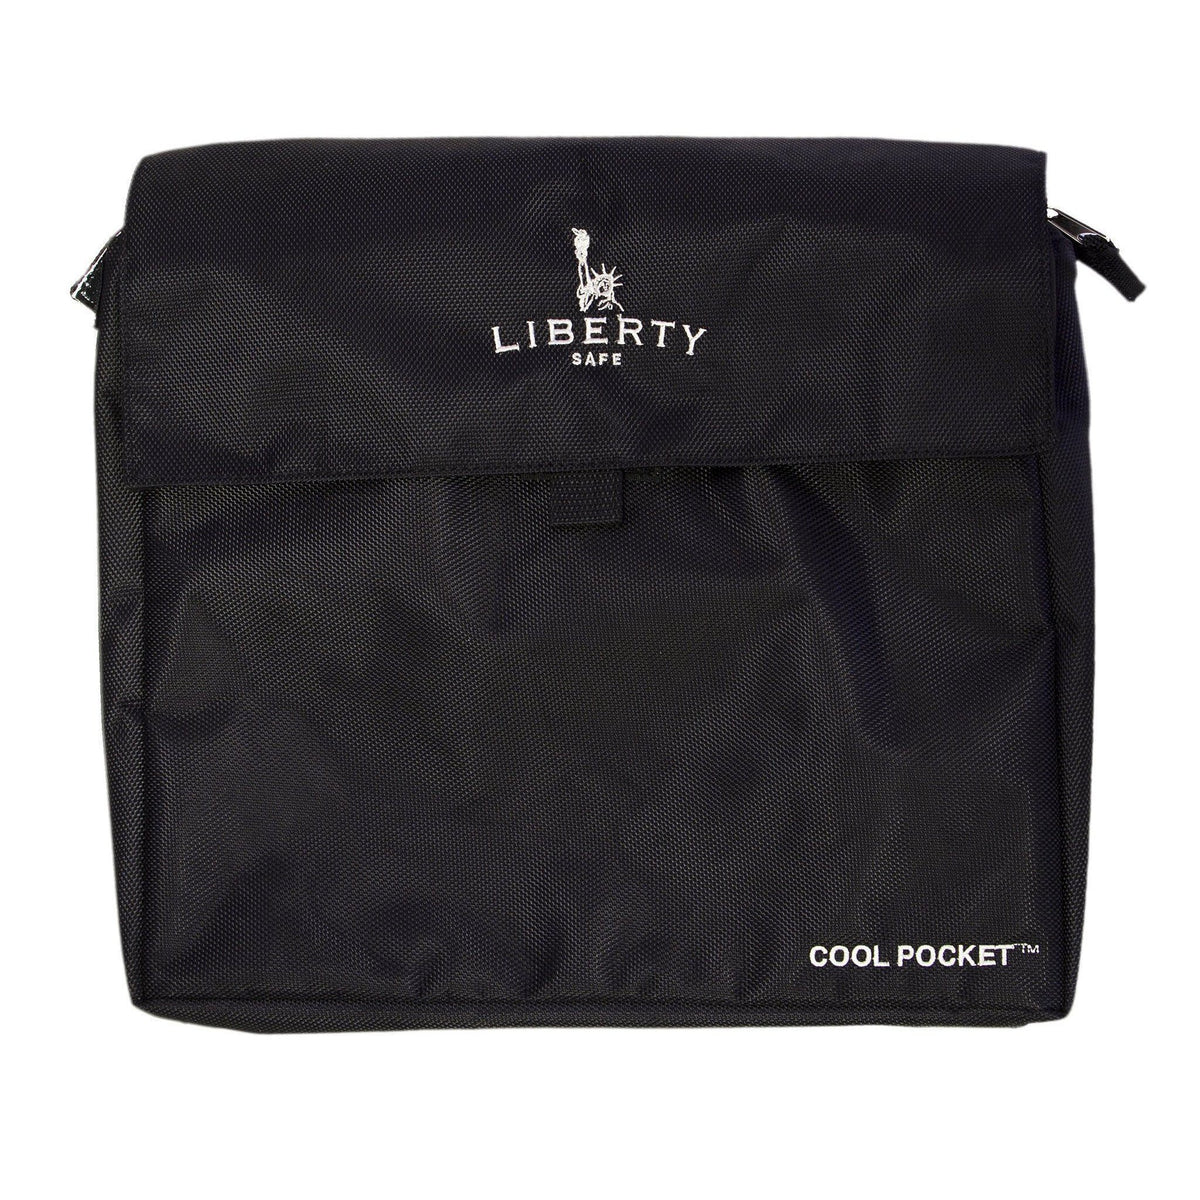 Liberty Safe-accessory-storage-cool-pocket